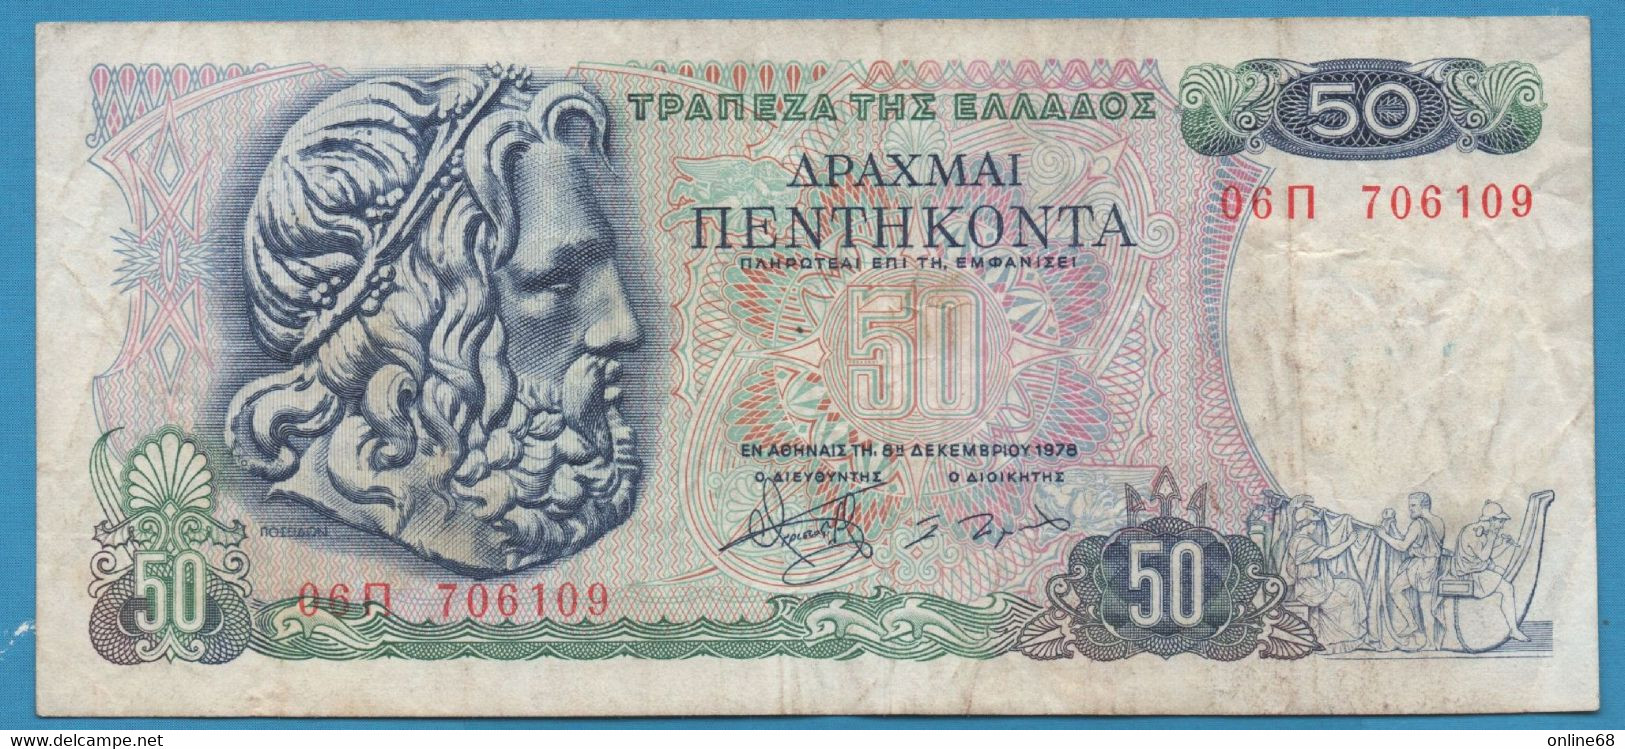 GREECE 50 DRACHMAI 08.12.1978 # 06Π 706109 F# 199 Poseidon - Grecia